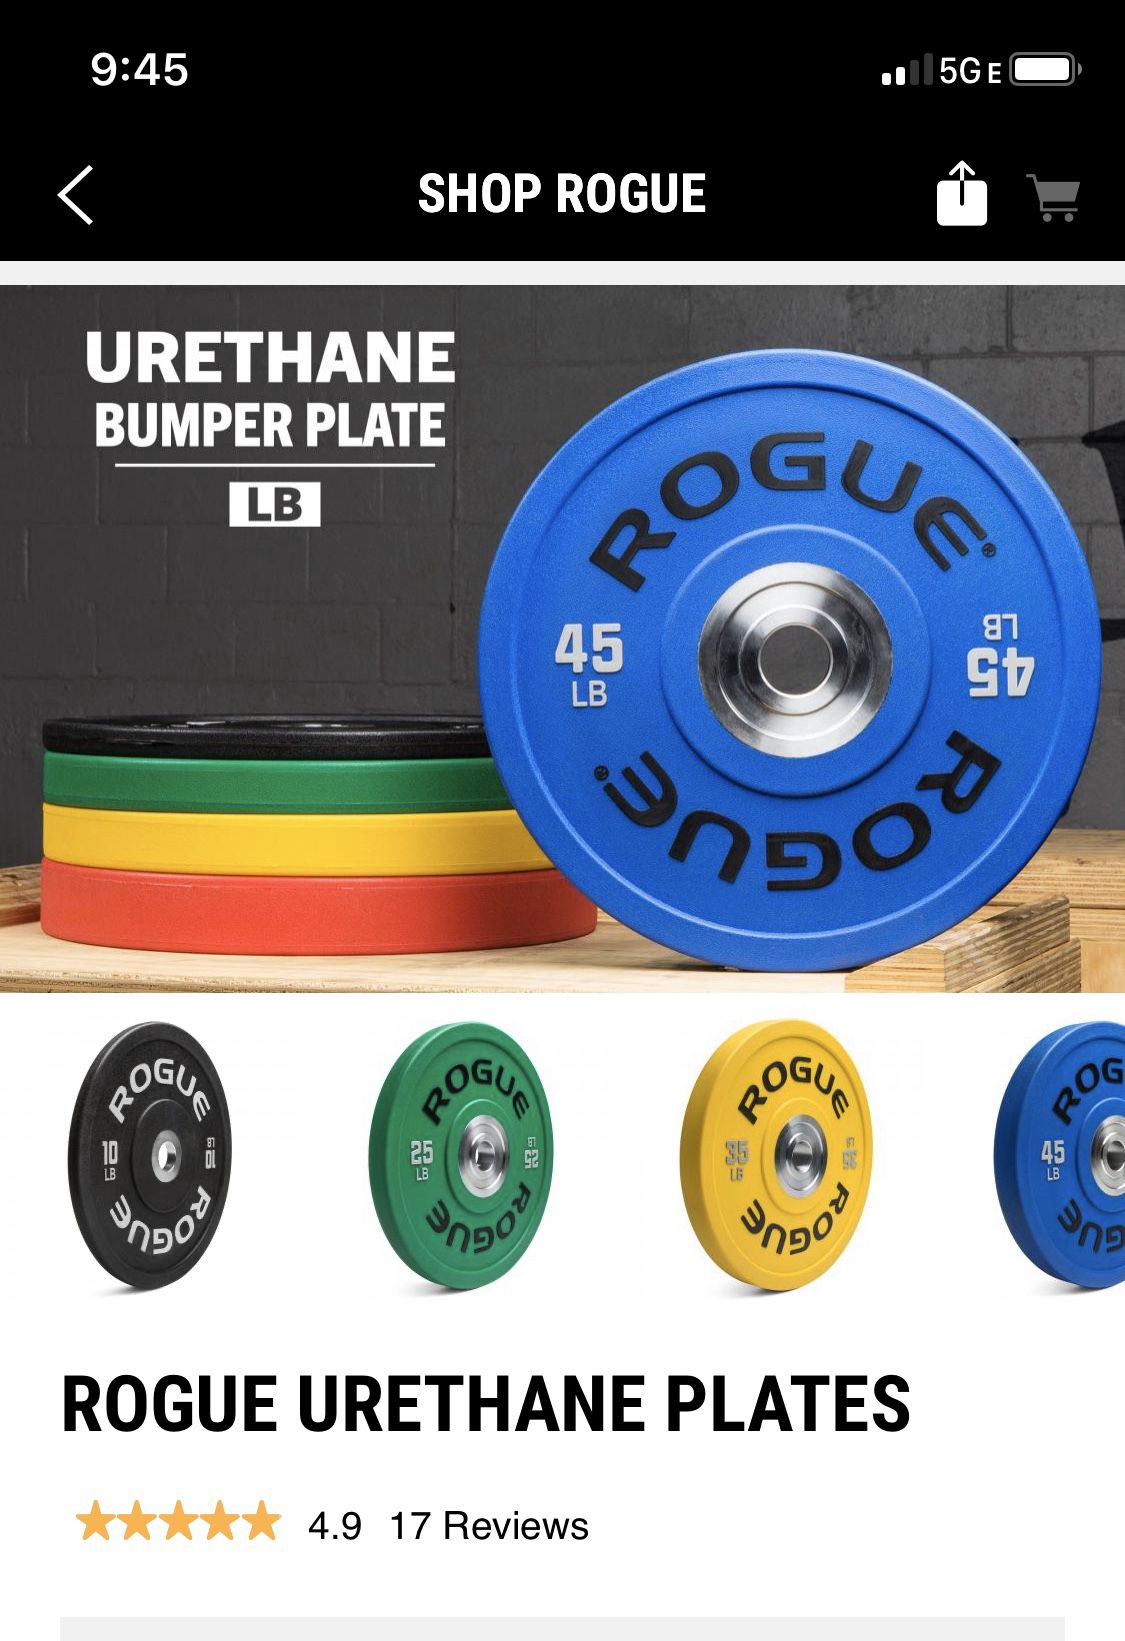 Rogue urethane bumper plates